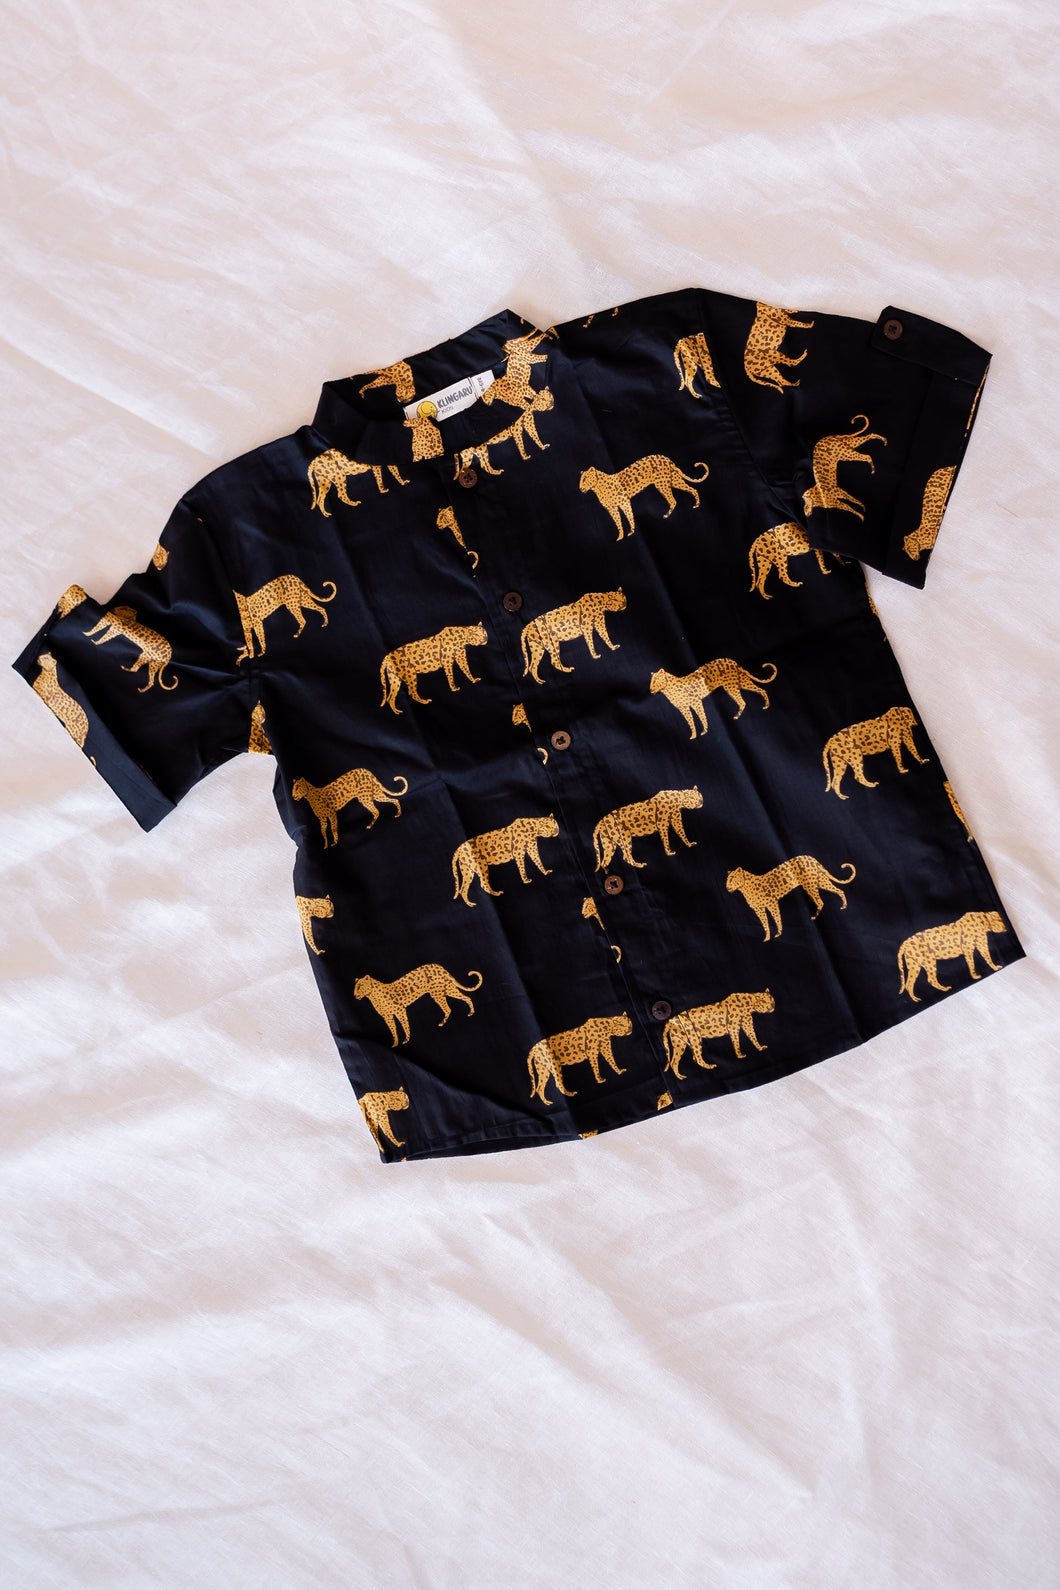 Klingaru Shirt for Men - Black Cheetah